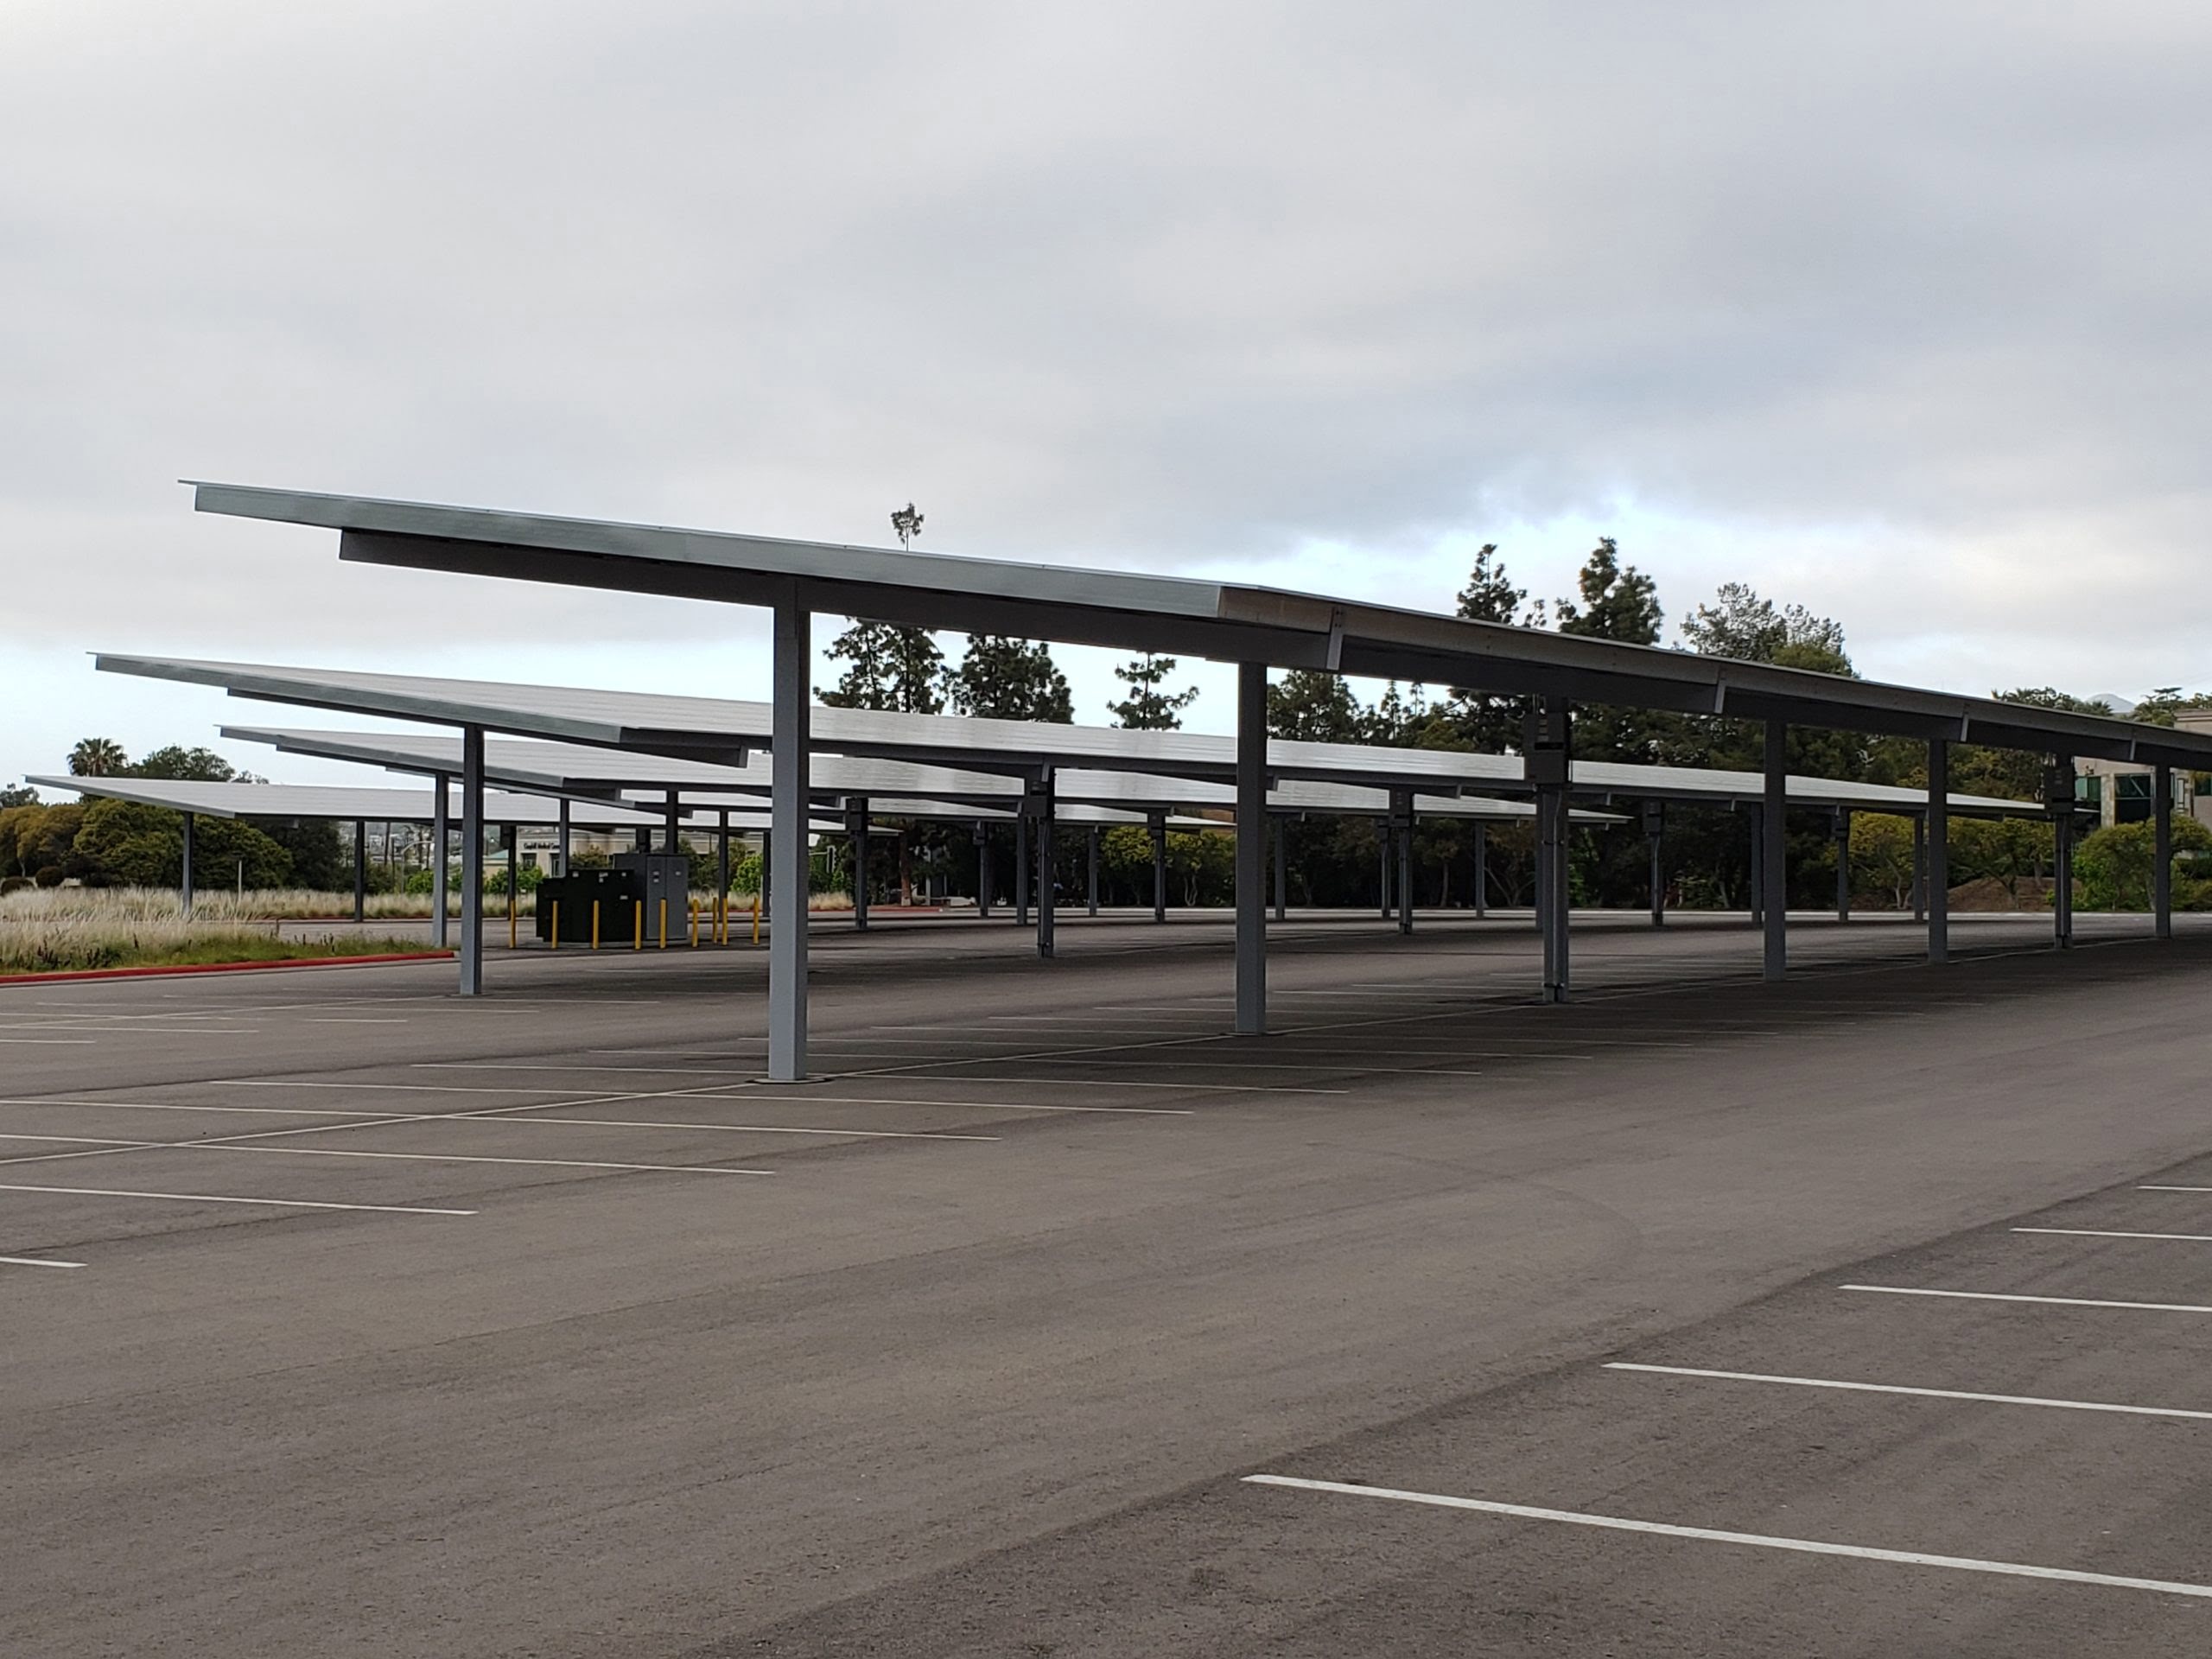 County of San Diego Solar Panels